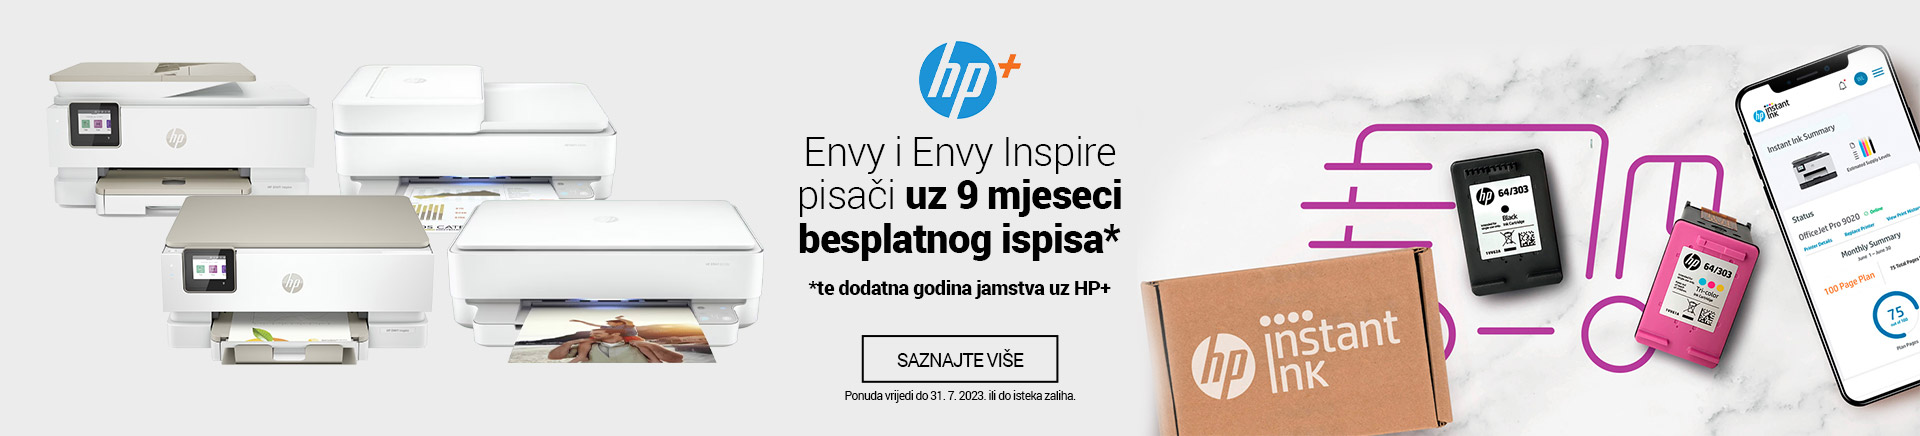 HR HP Envy i Envy Inspire pisaci 9 mjeseci MOBILE 380 X 436.jpg